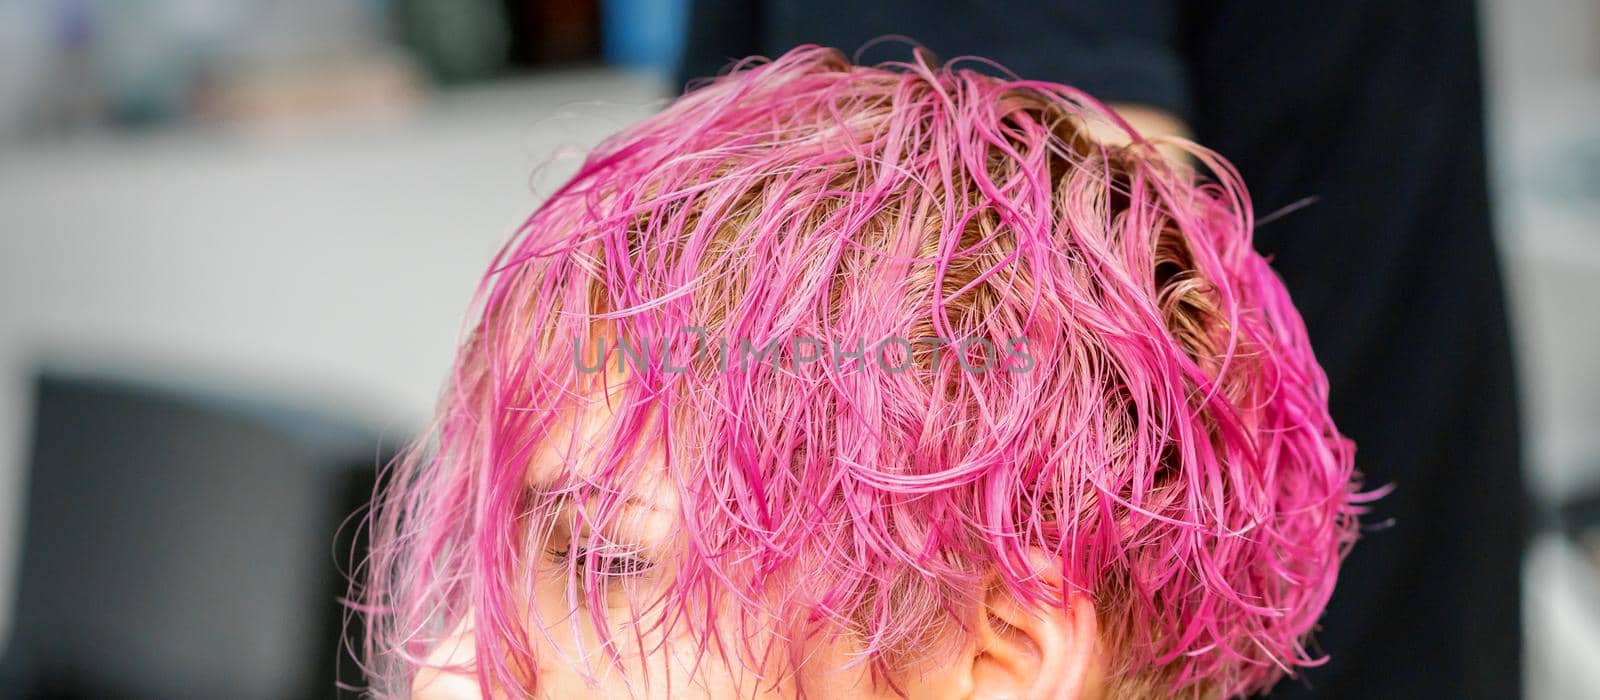 Beautiful young caucasian woman receiving new short pink hairstyle in hairdresser salon. by okskukuruza